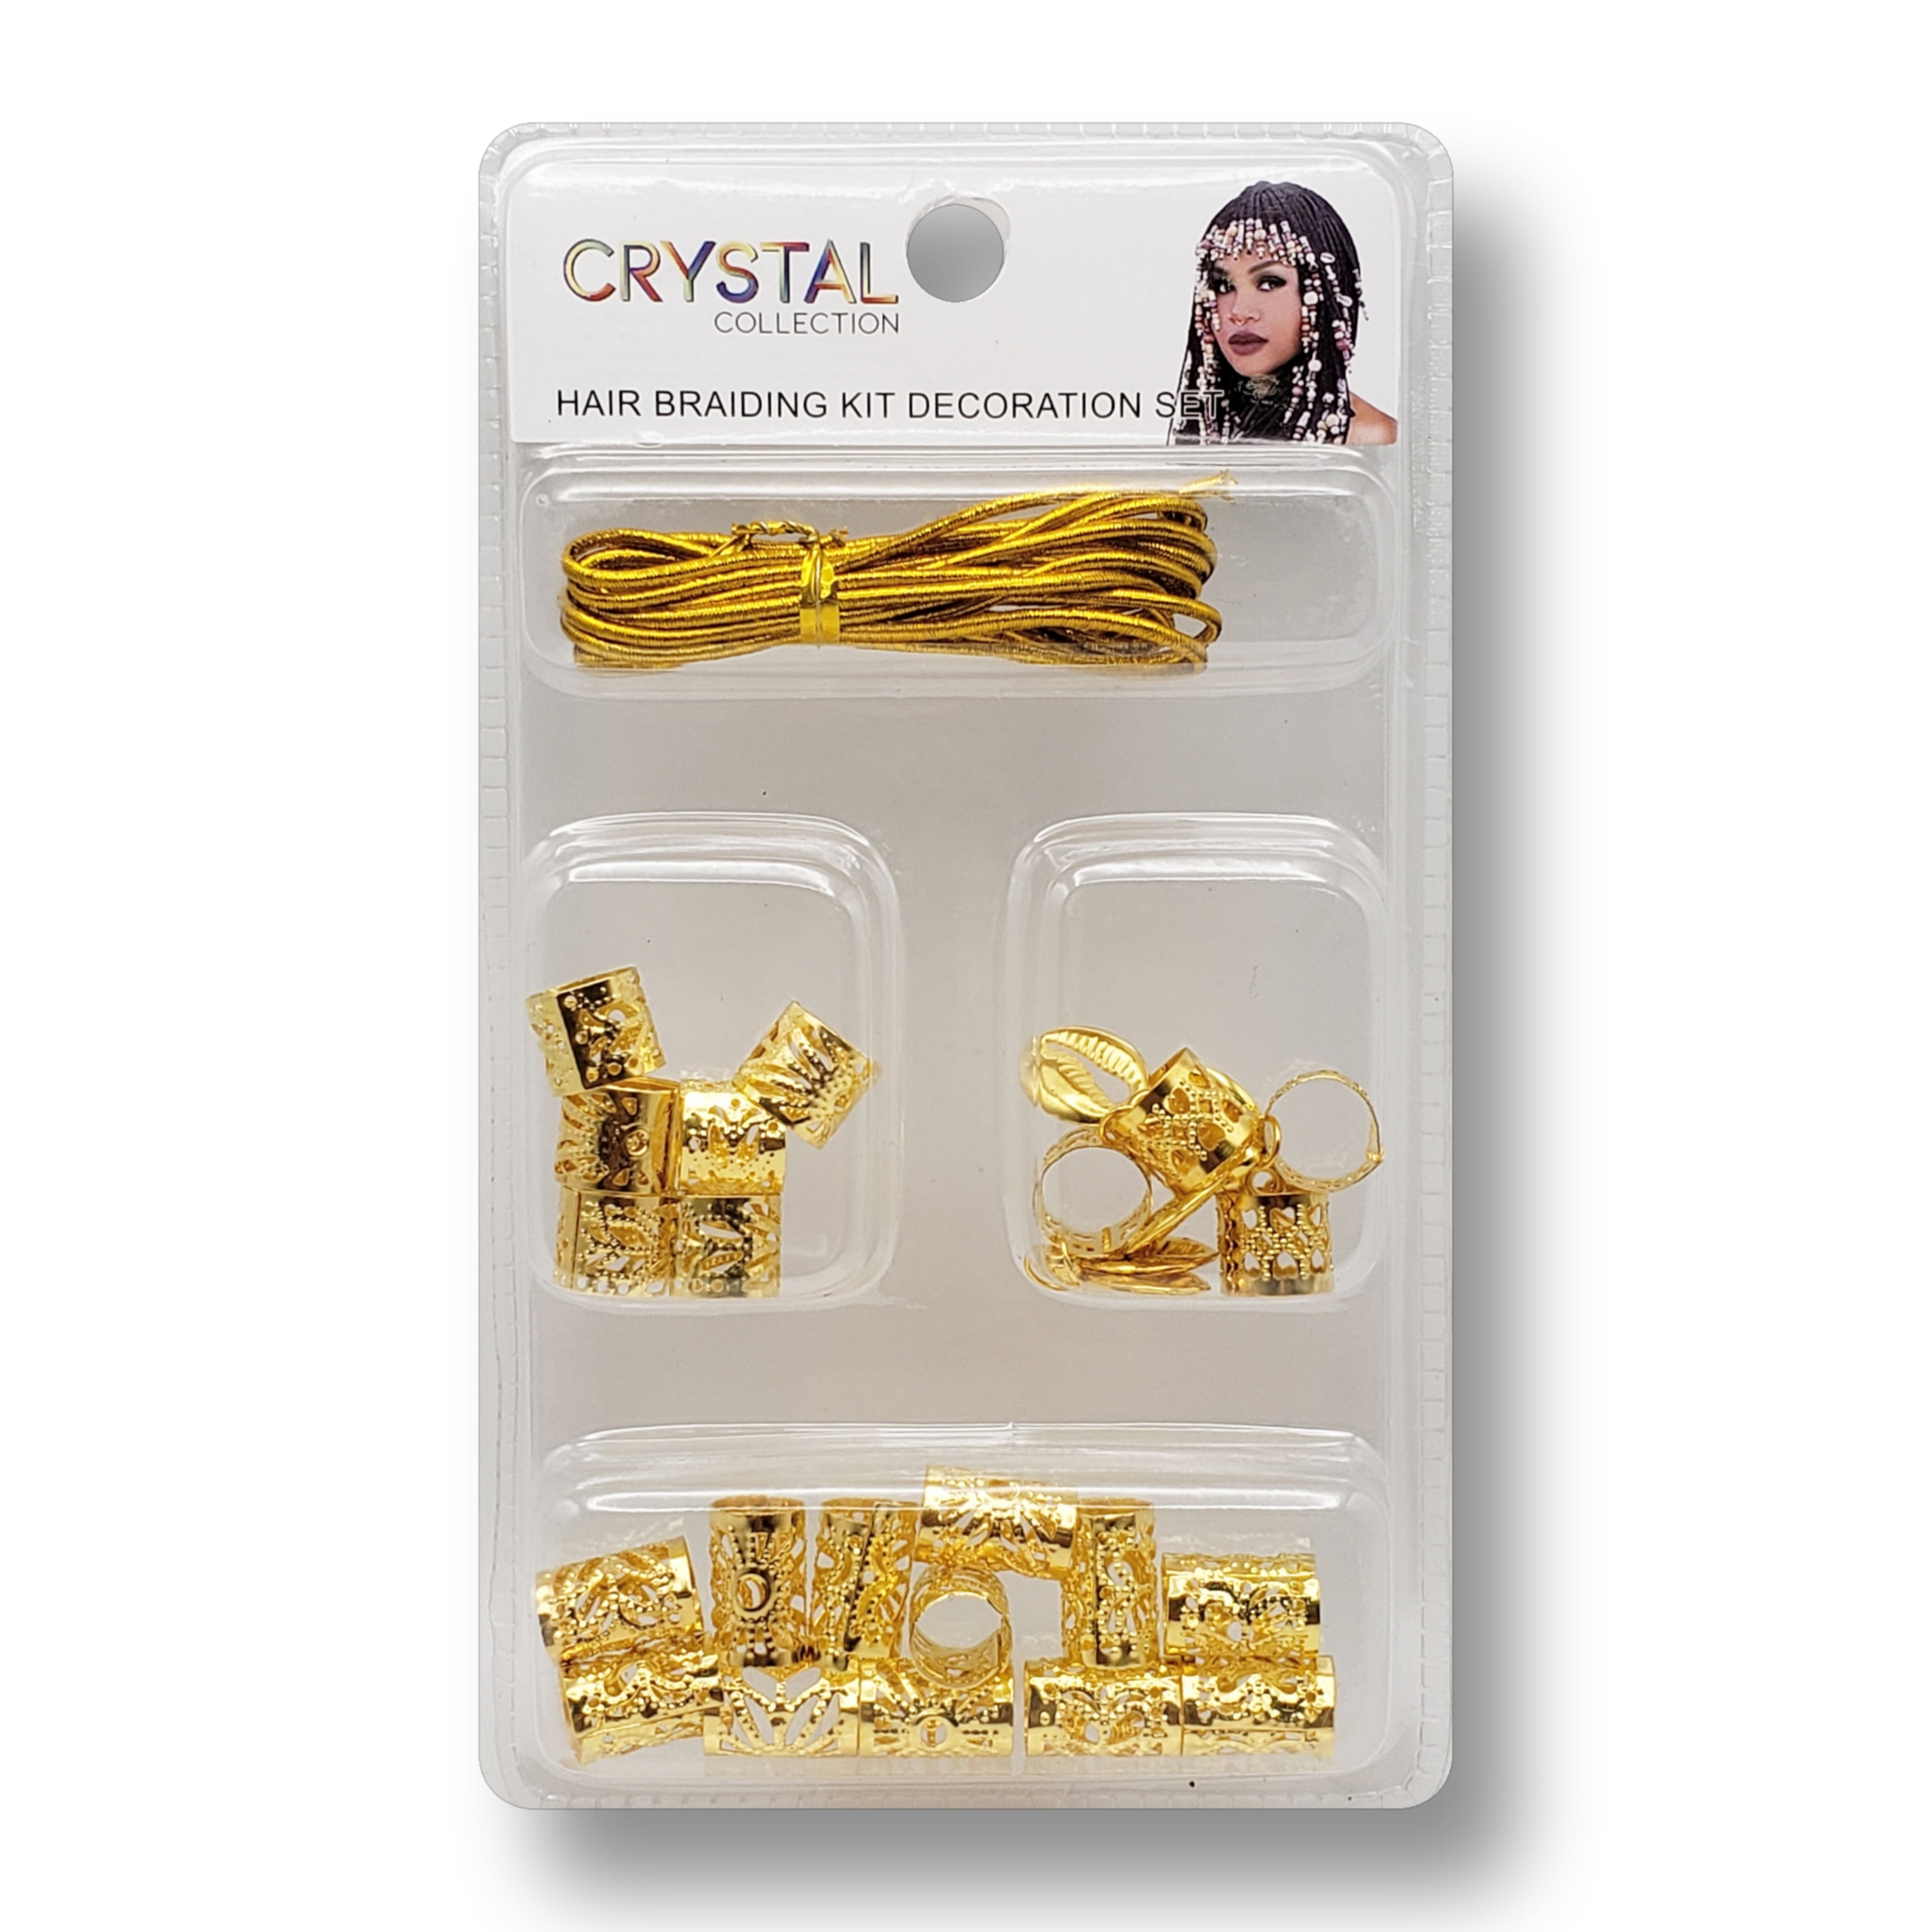 Crystal Collection Hair Braiding Decoration Kit